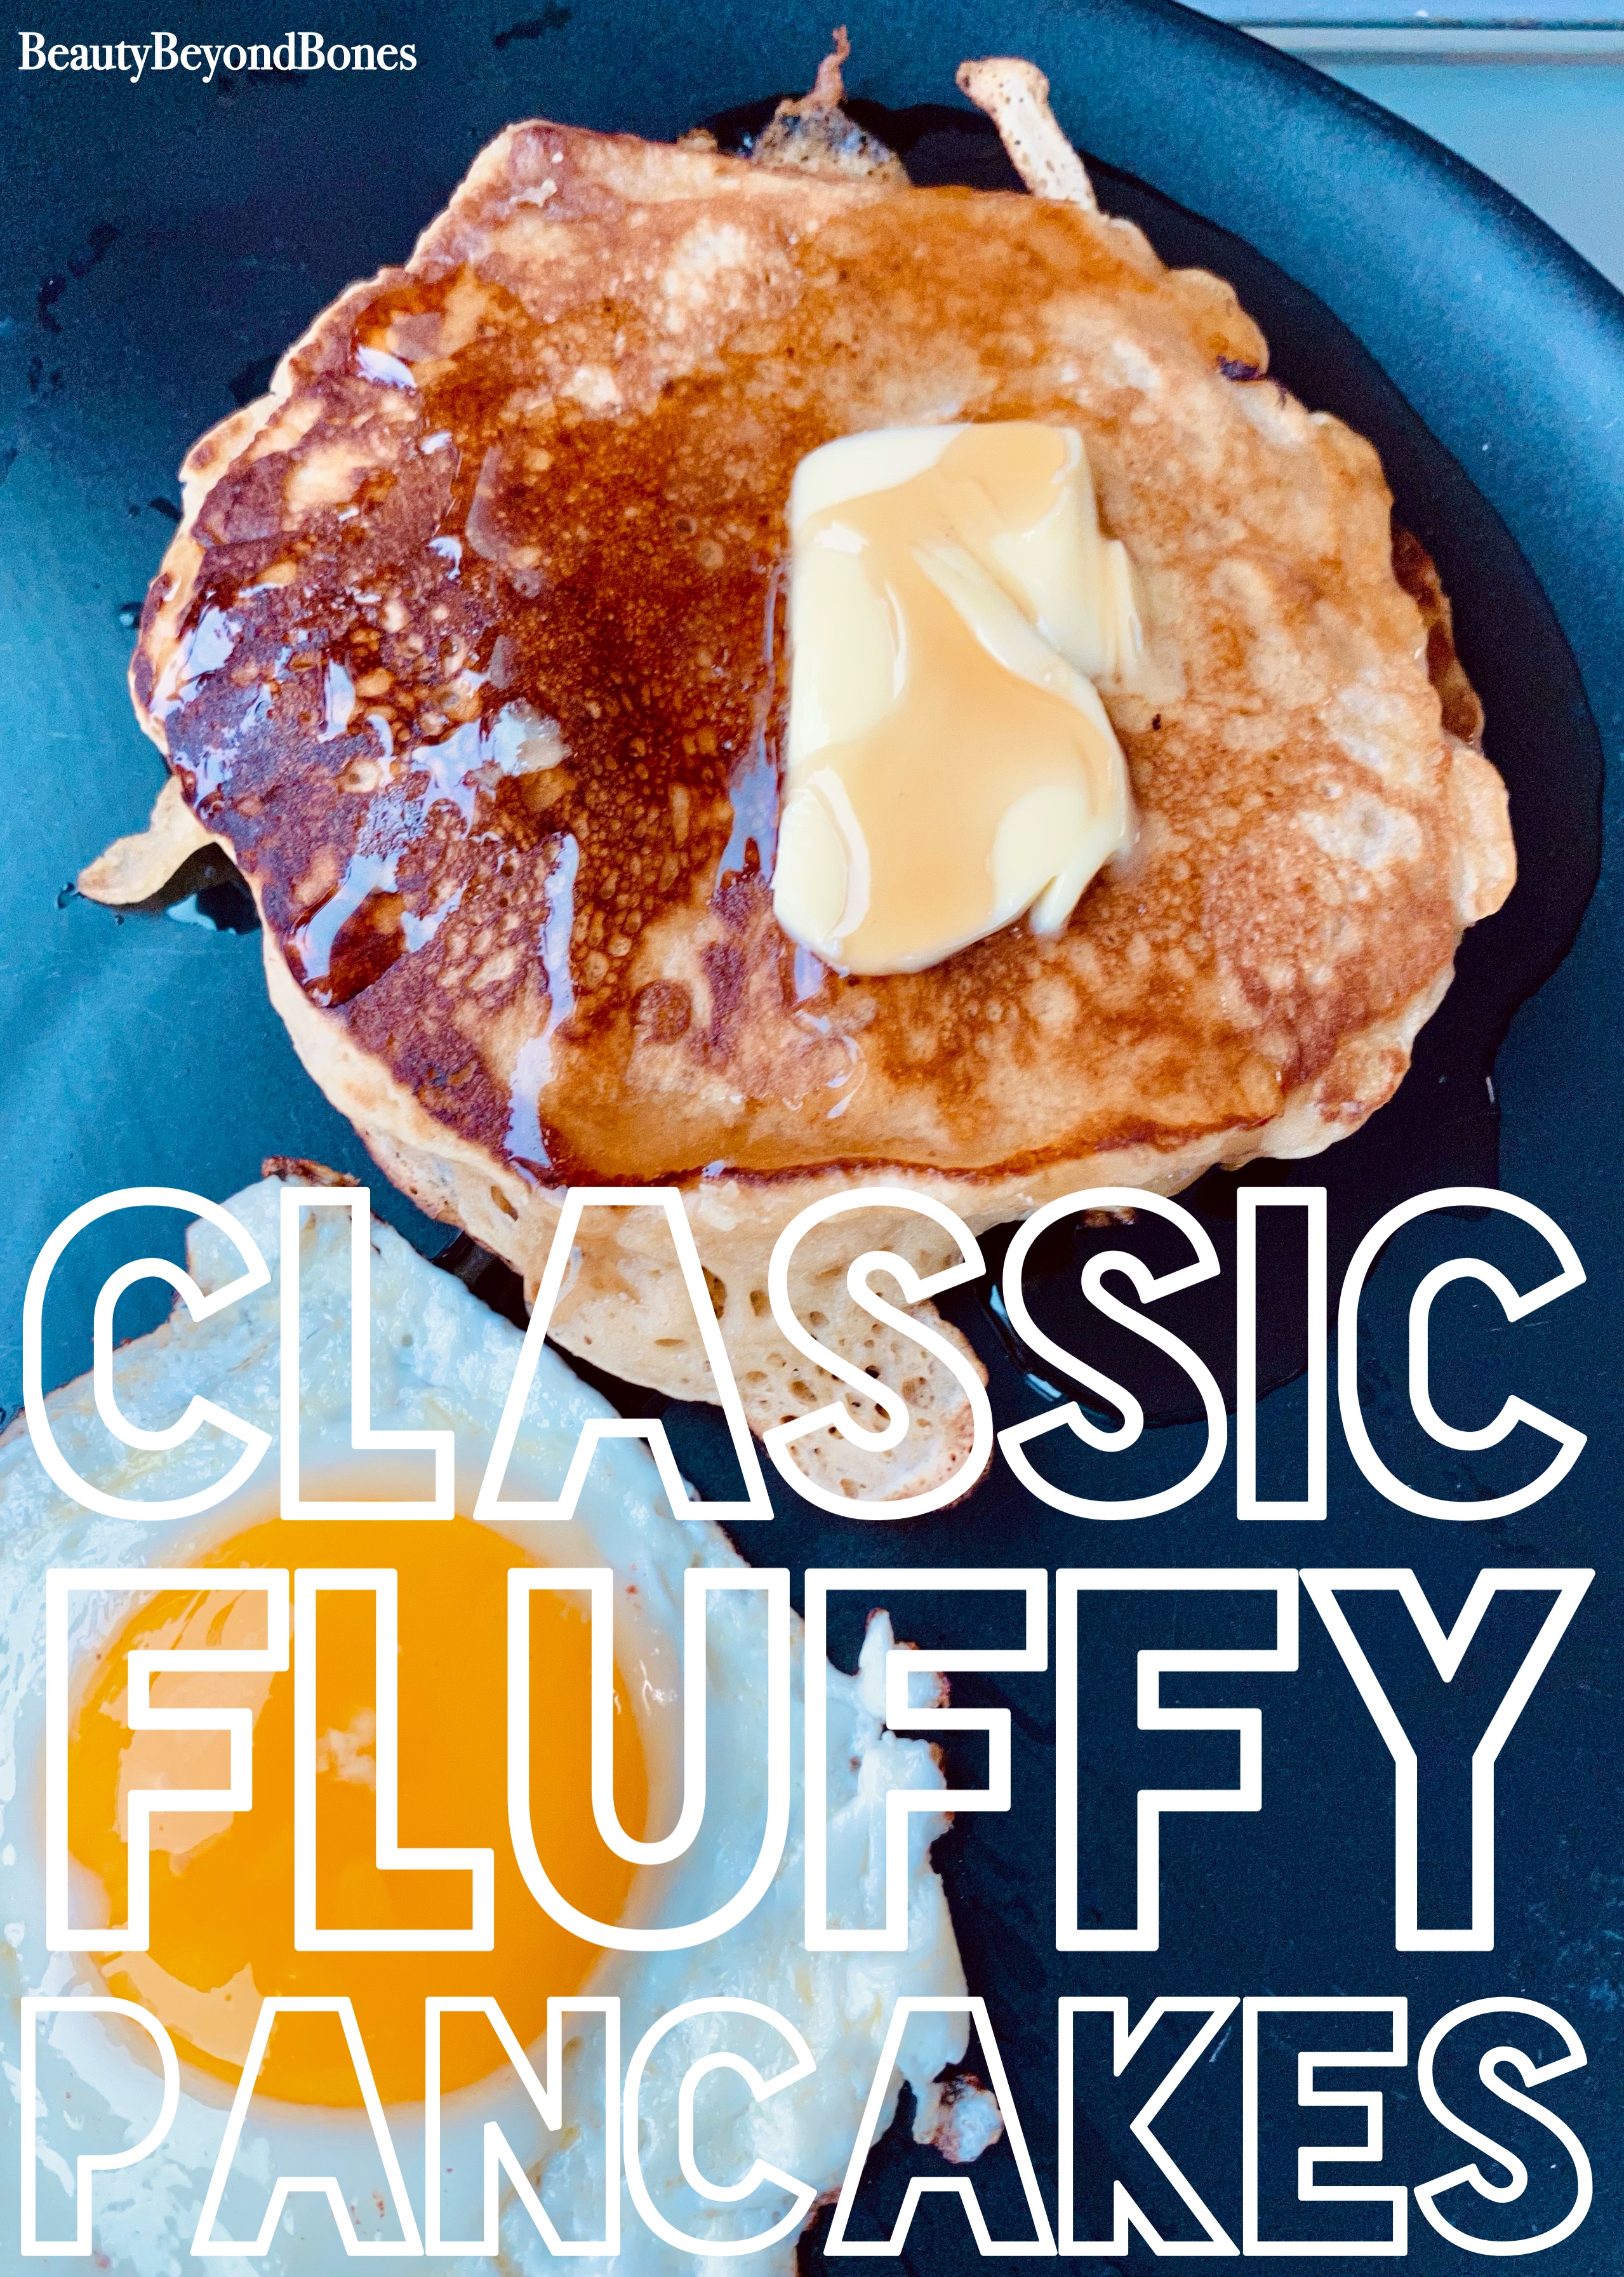 Classic Fluffy Pancakes!